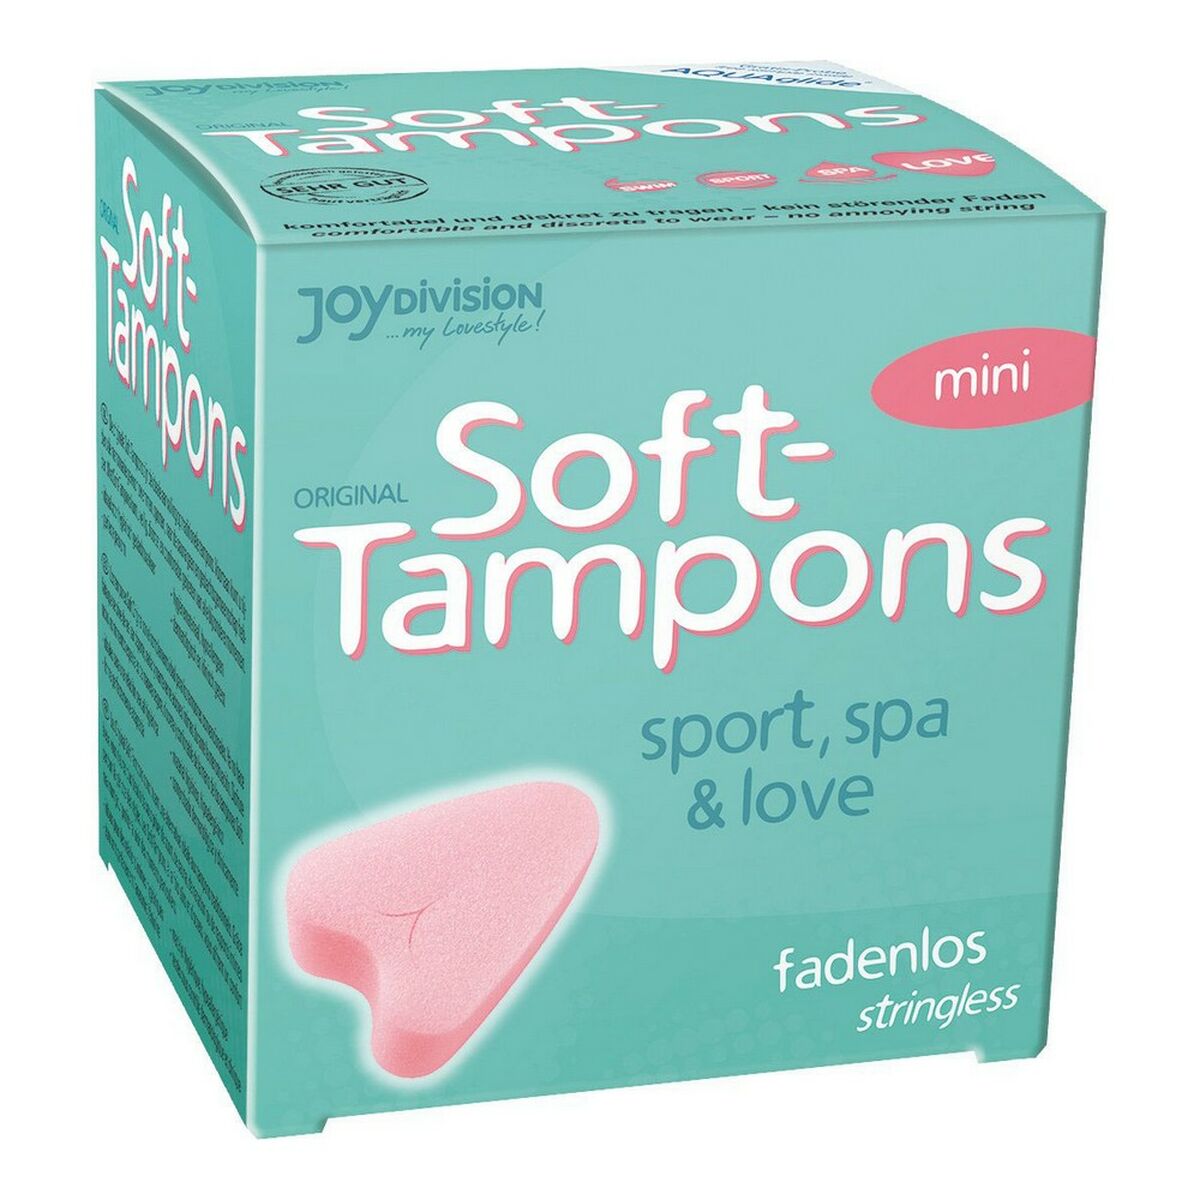 Hygienic Tampons Sport, Spa & Love Joydivision 12204 (3 pcs) 3 Units